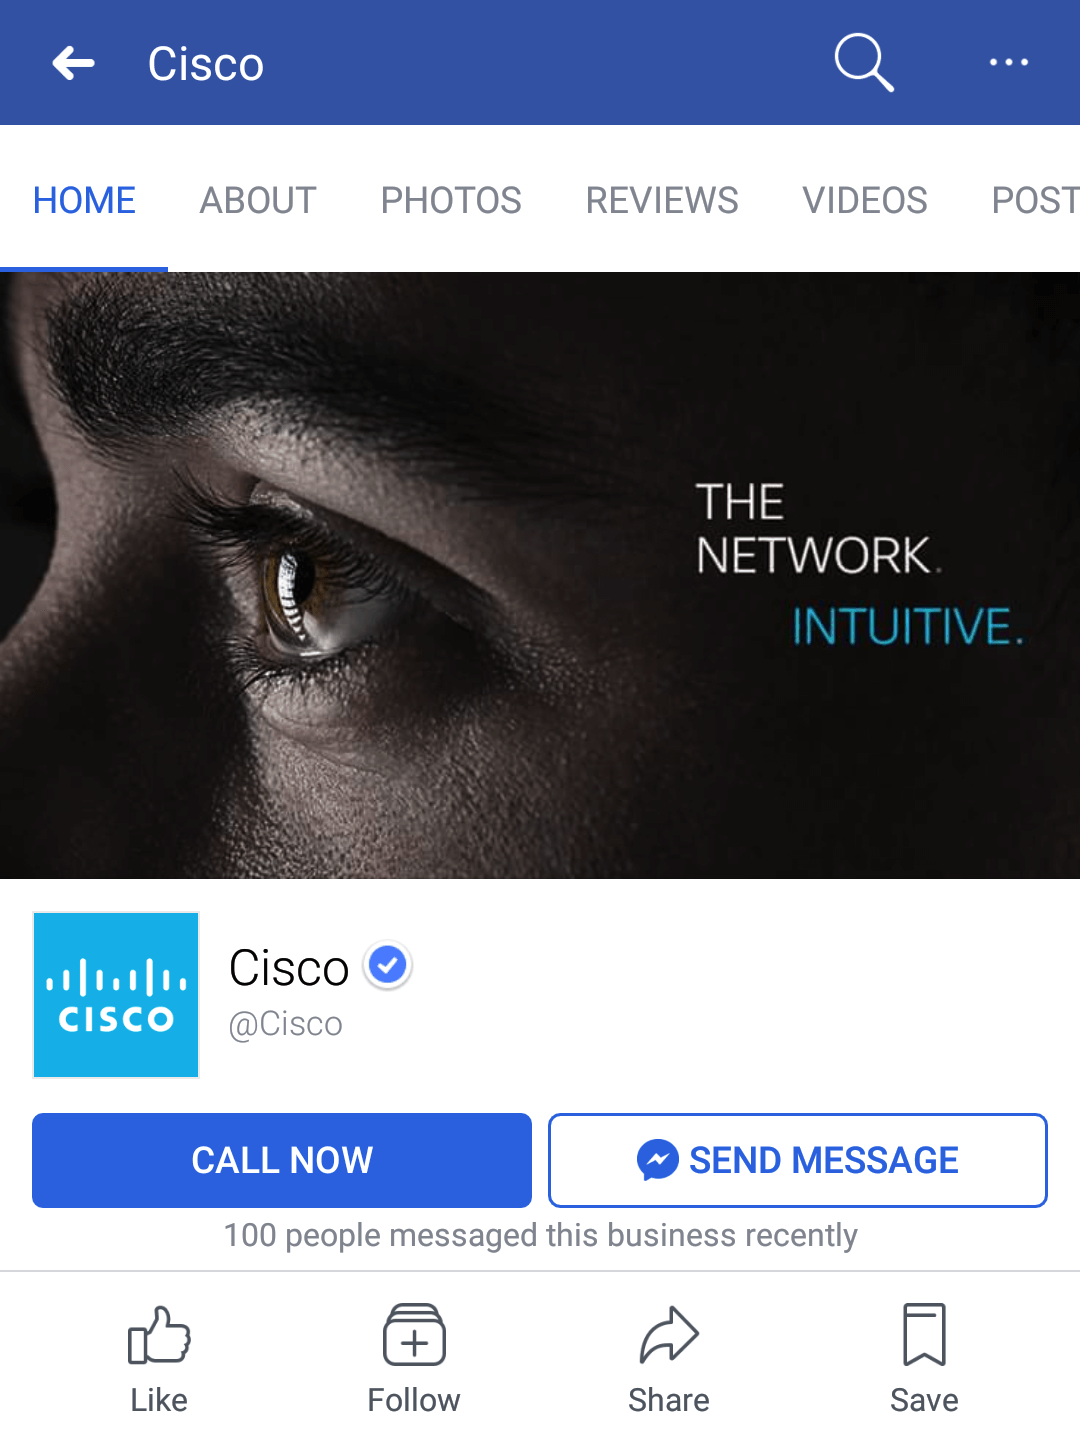 Giao diện mobile của Cisco